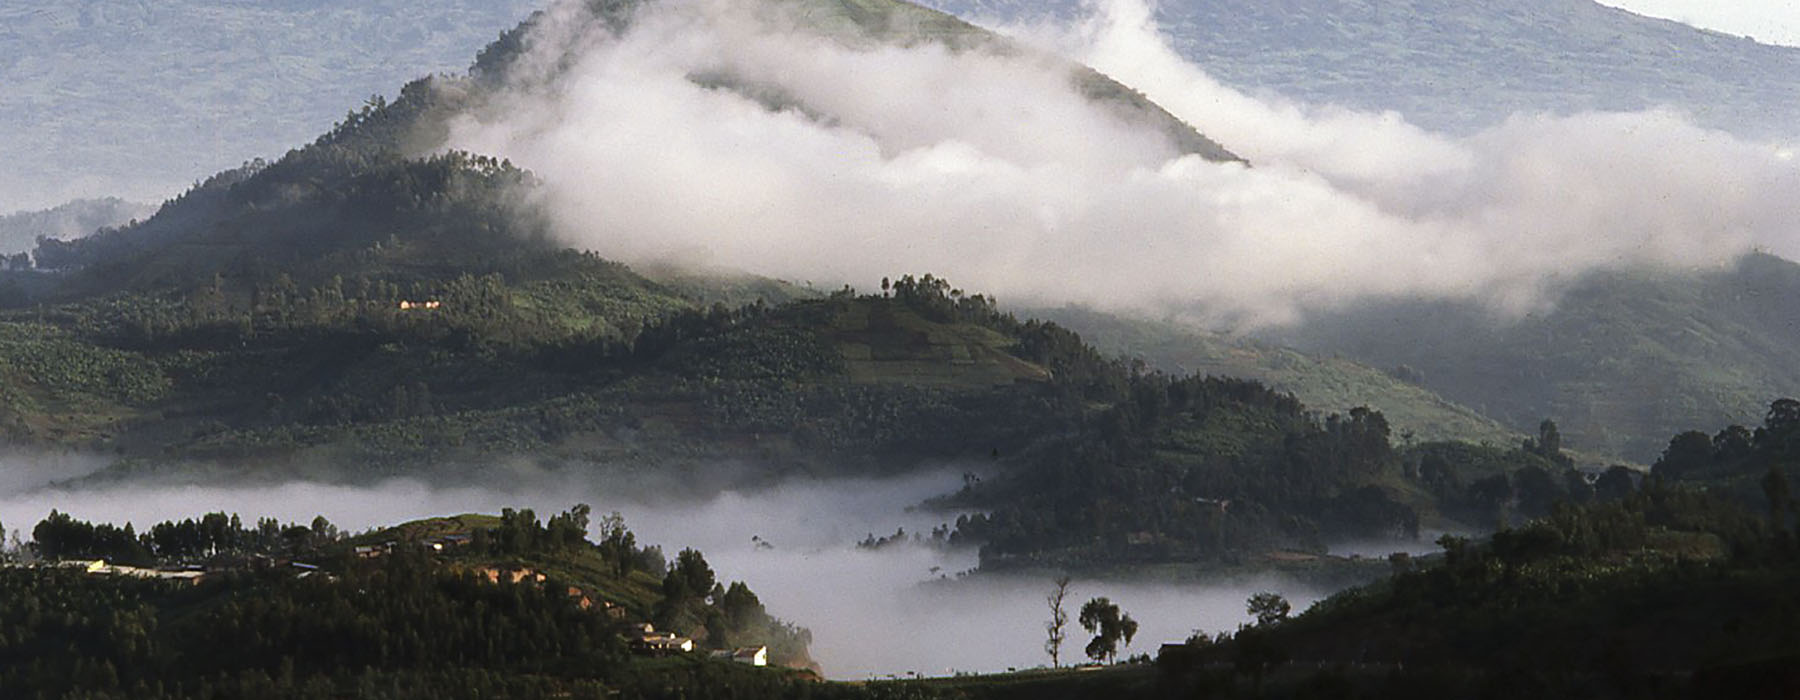 All our Rwanda<br class="hidden-md hidden-lg" /> Safari Holidays